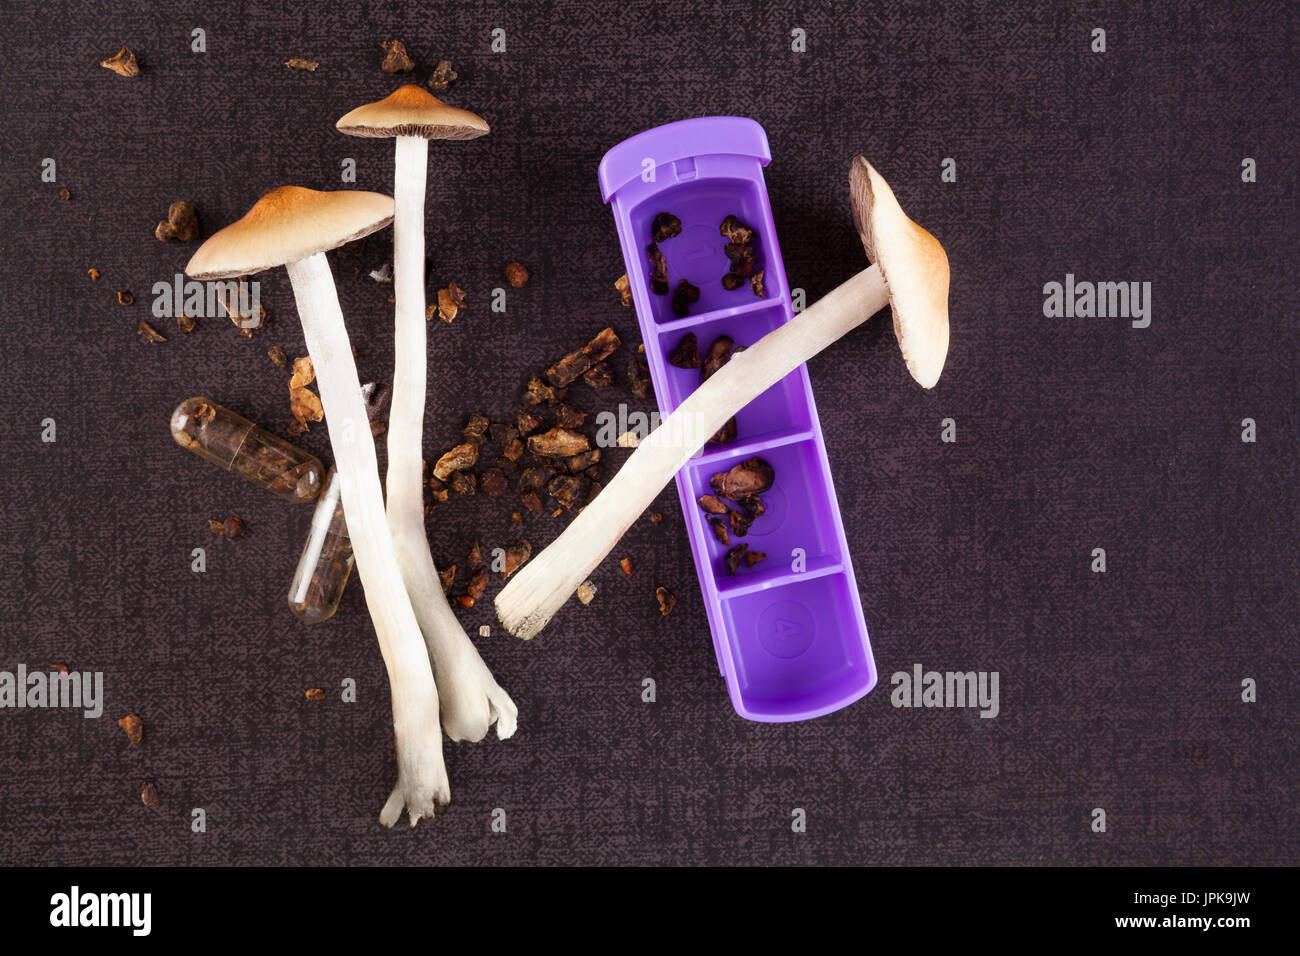 Fresh and dried psilocybin magic mushrooms on black surface, top view. Alternative medicine. Microdosing. Stock Photo